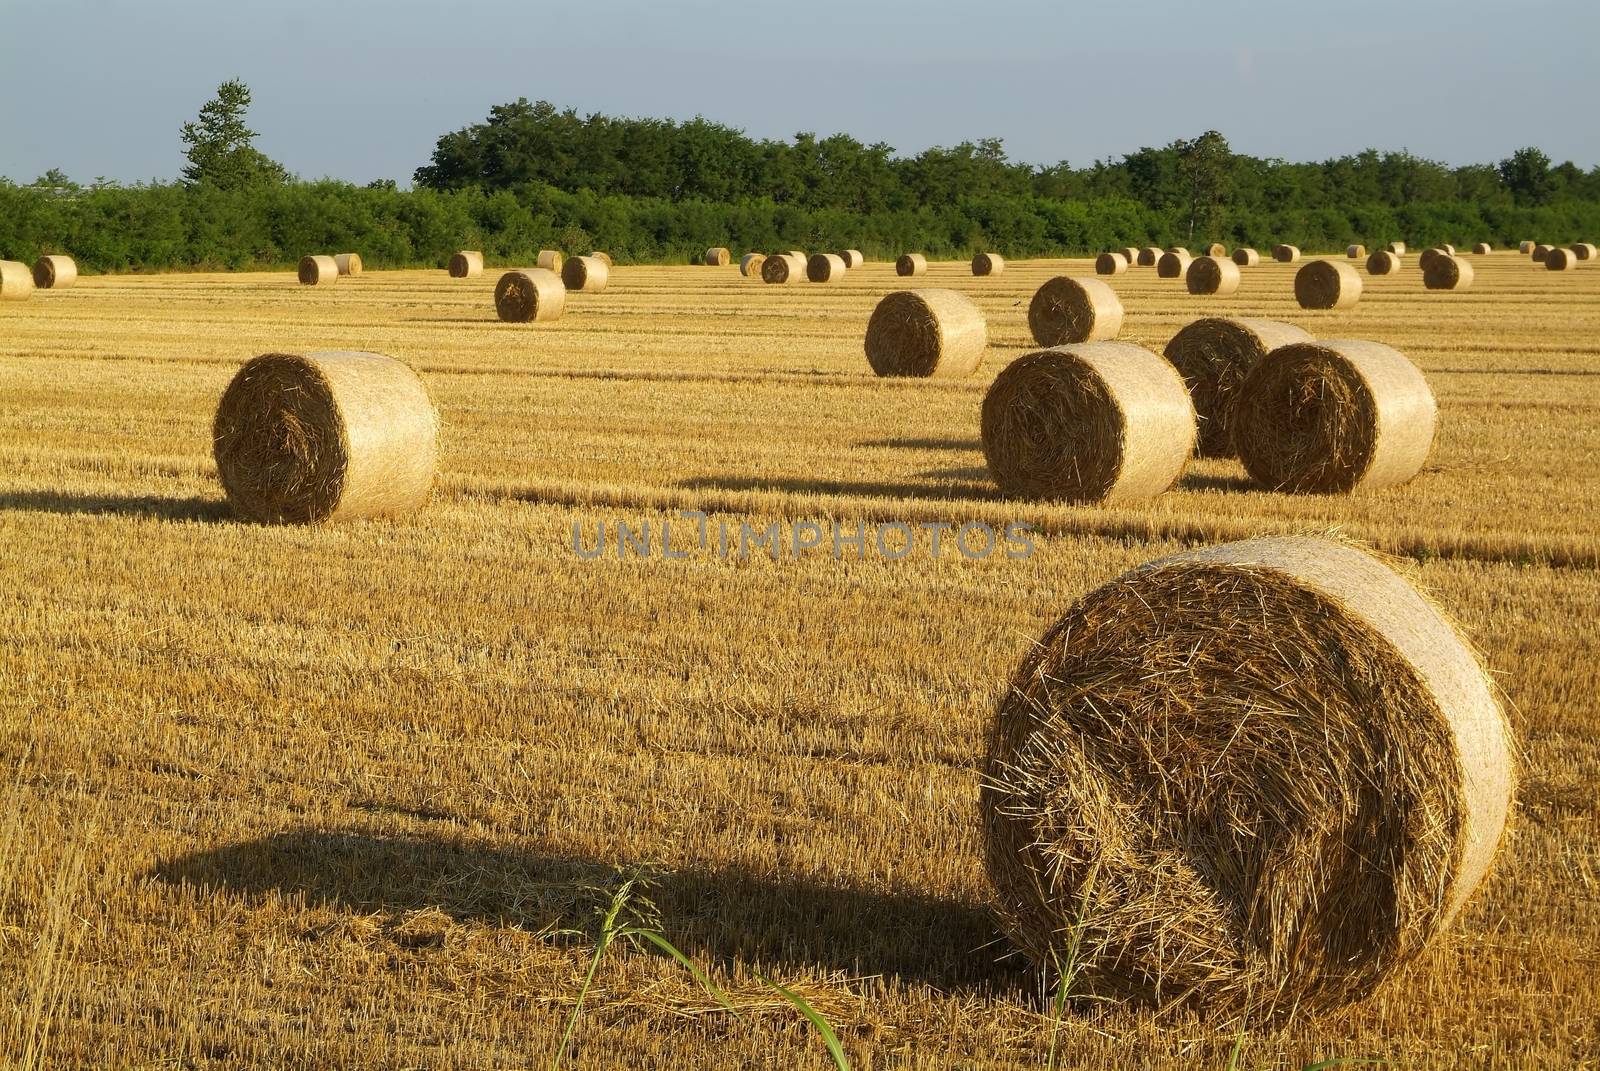 hay bale in harvest field by romeocharly